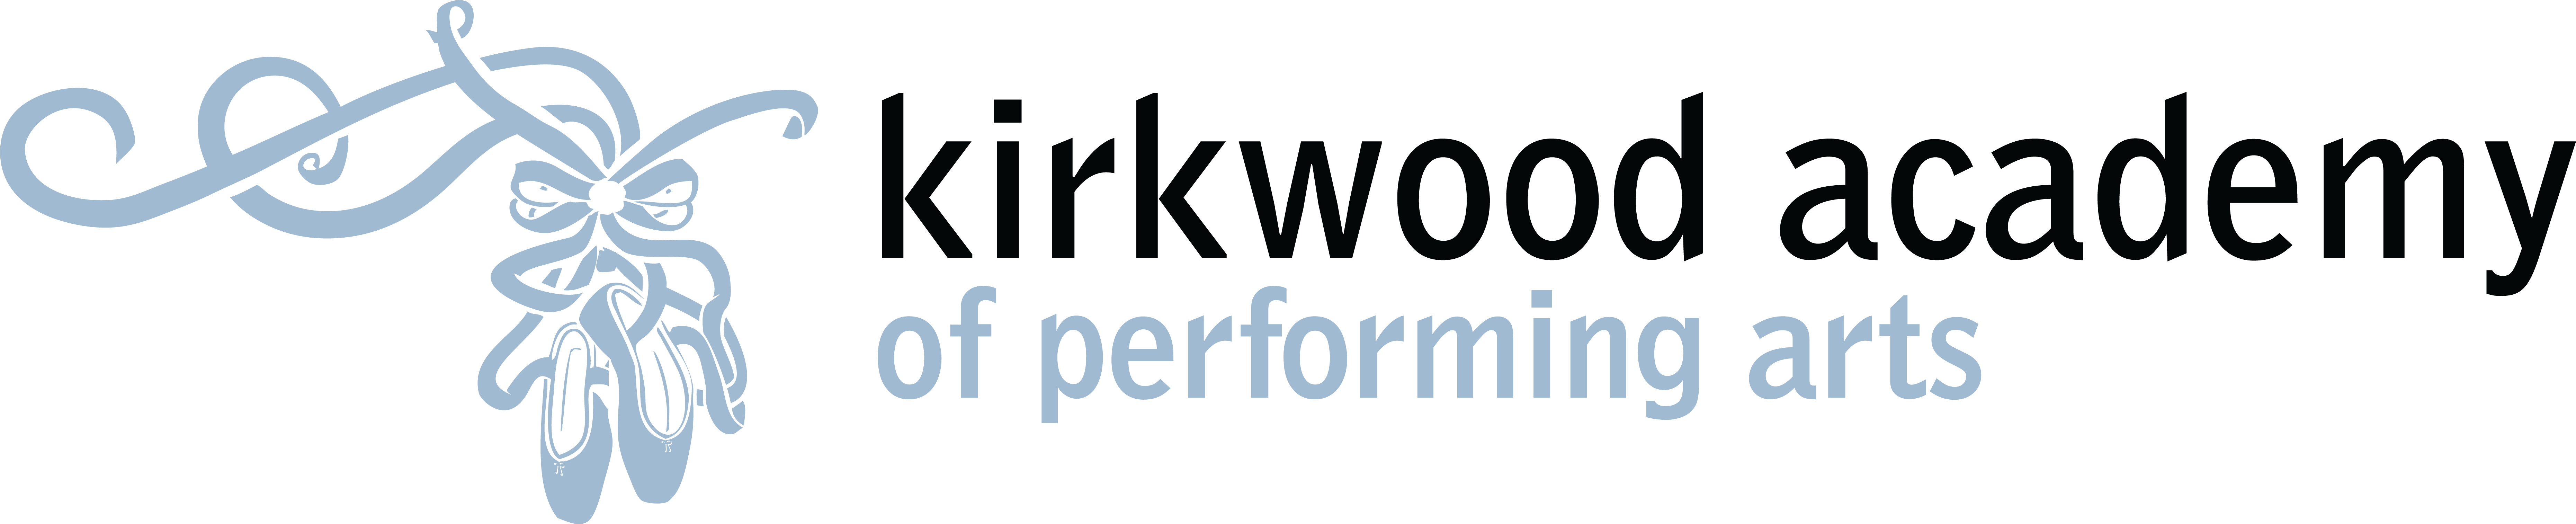 Kirkwood Academy of Performing Arts Logo